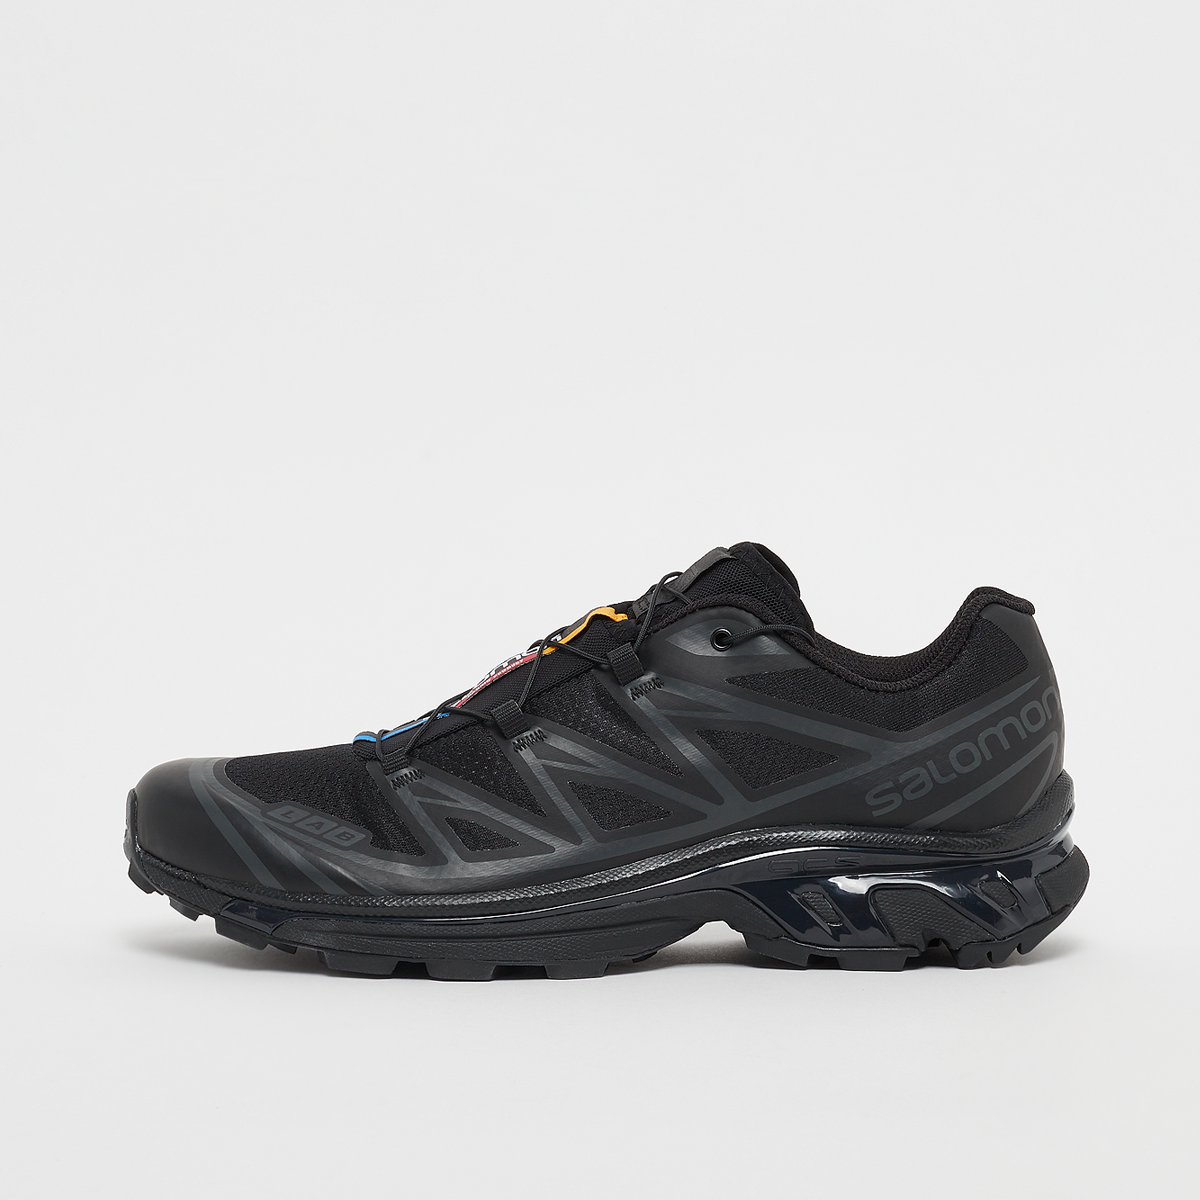 XT-6, Salomon, Footwear, black/black/phantom, taille: 36 2/3